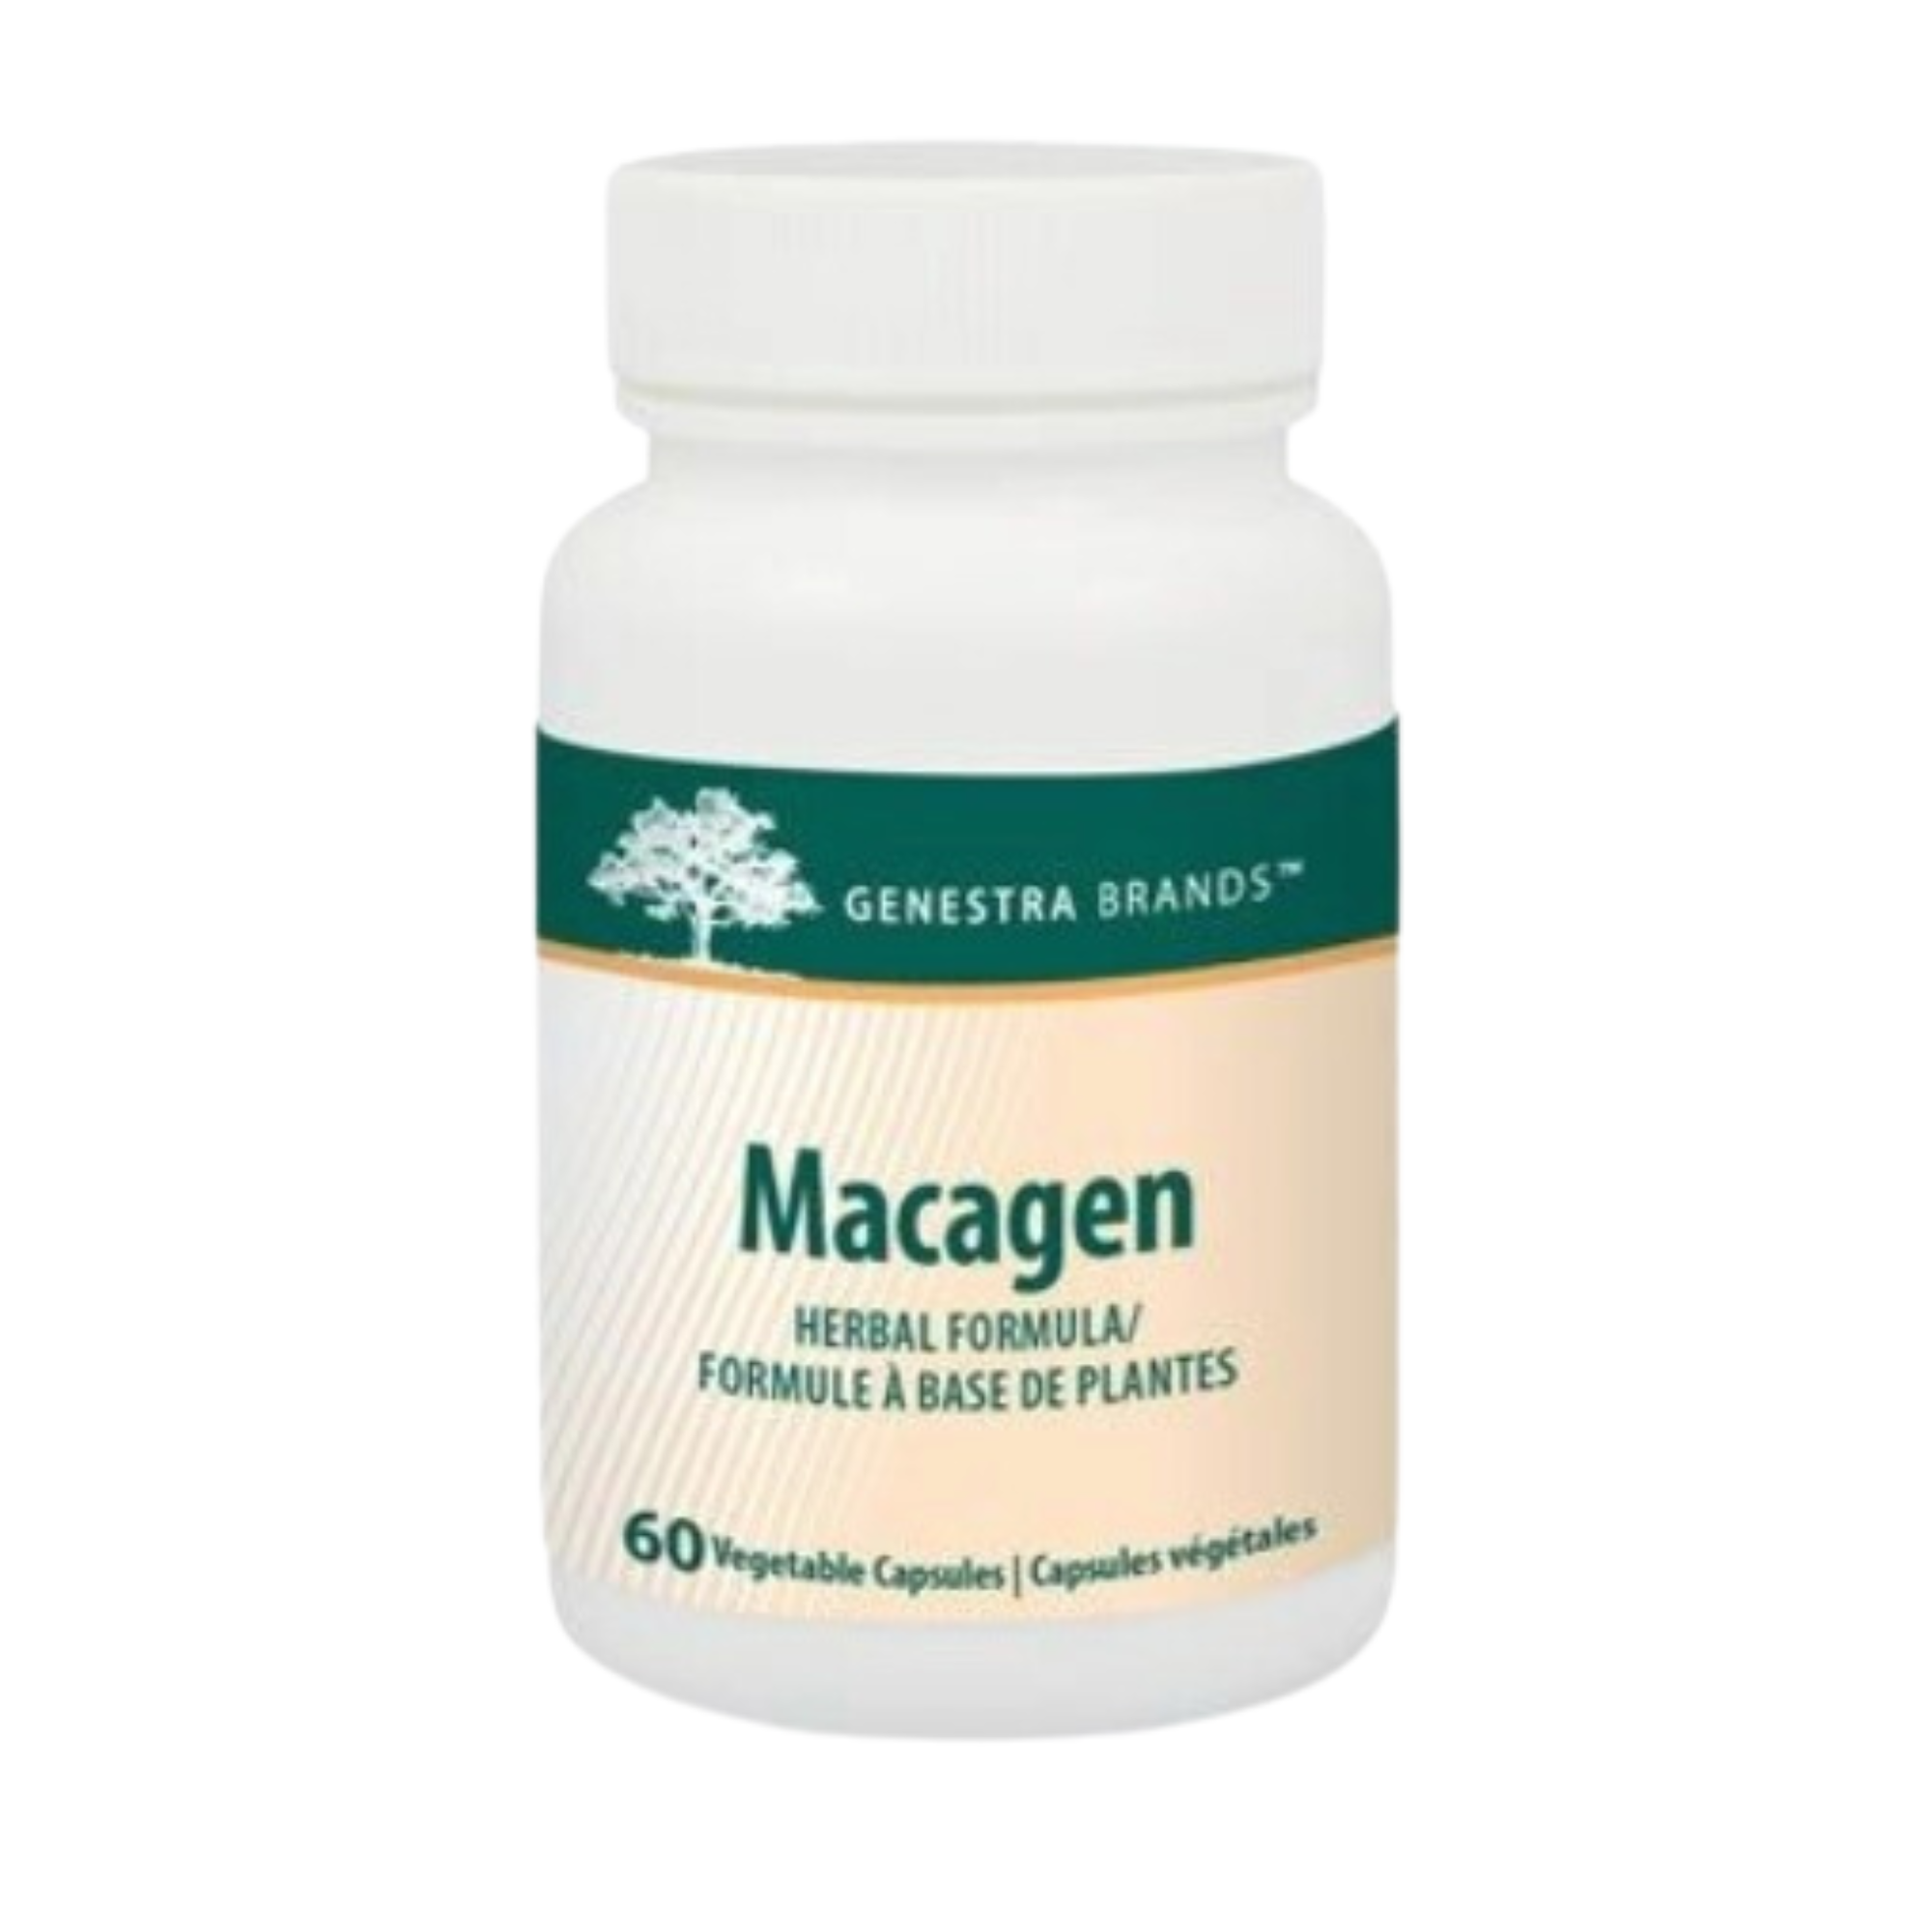 macagen 60 capsules Genestra